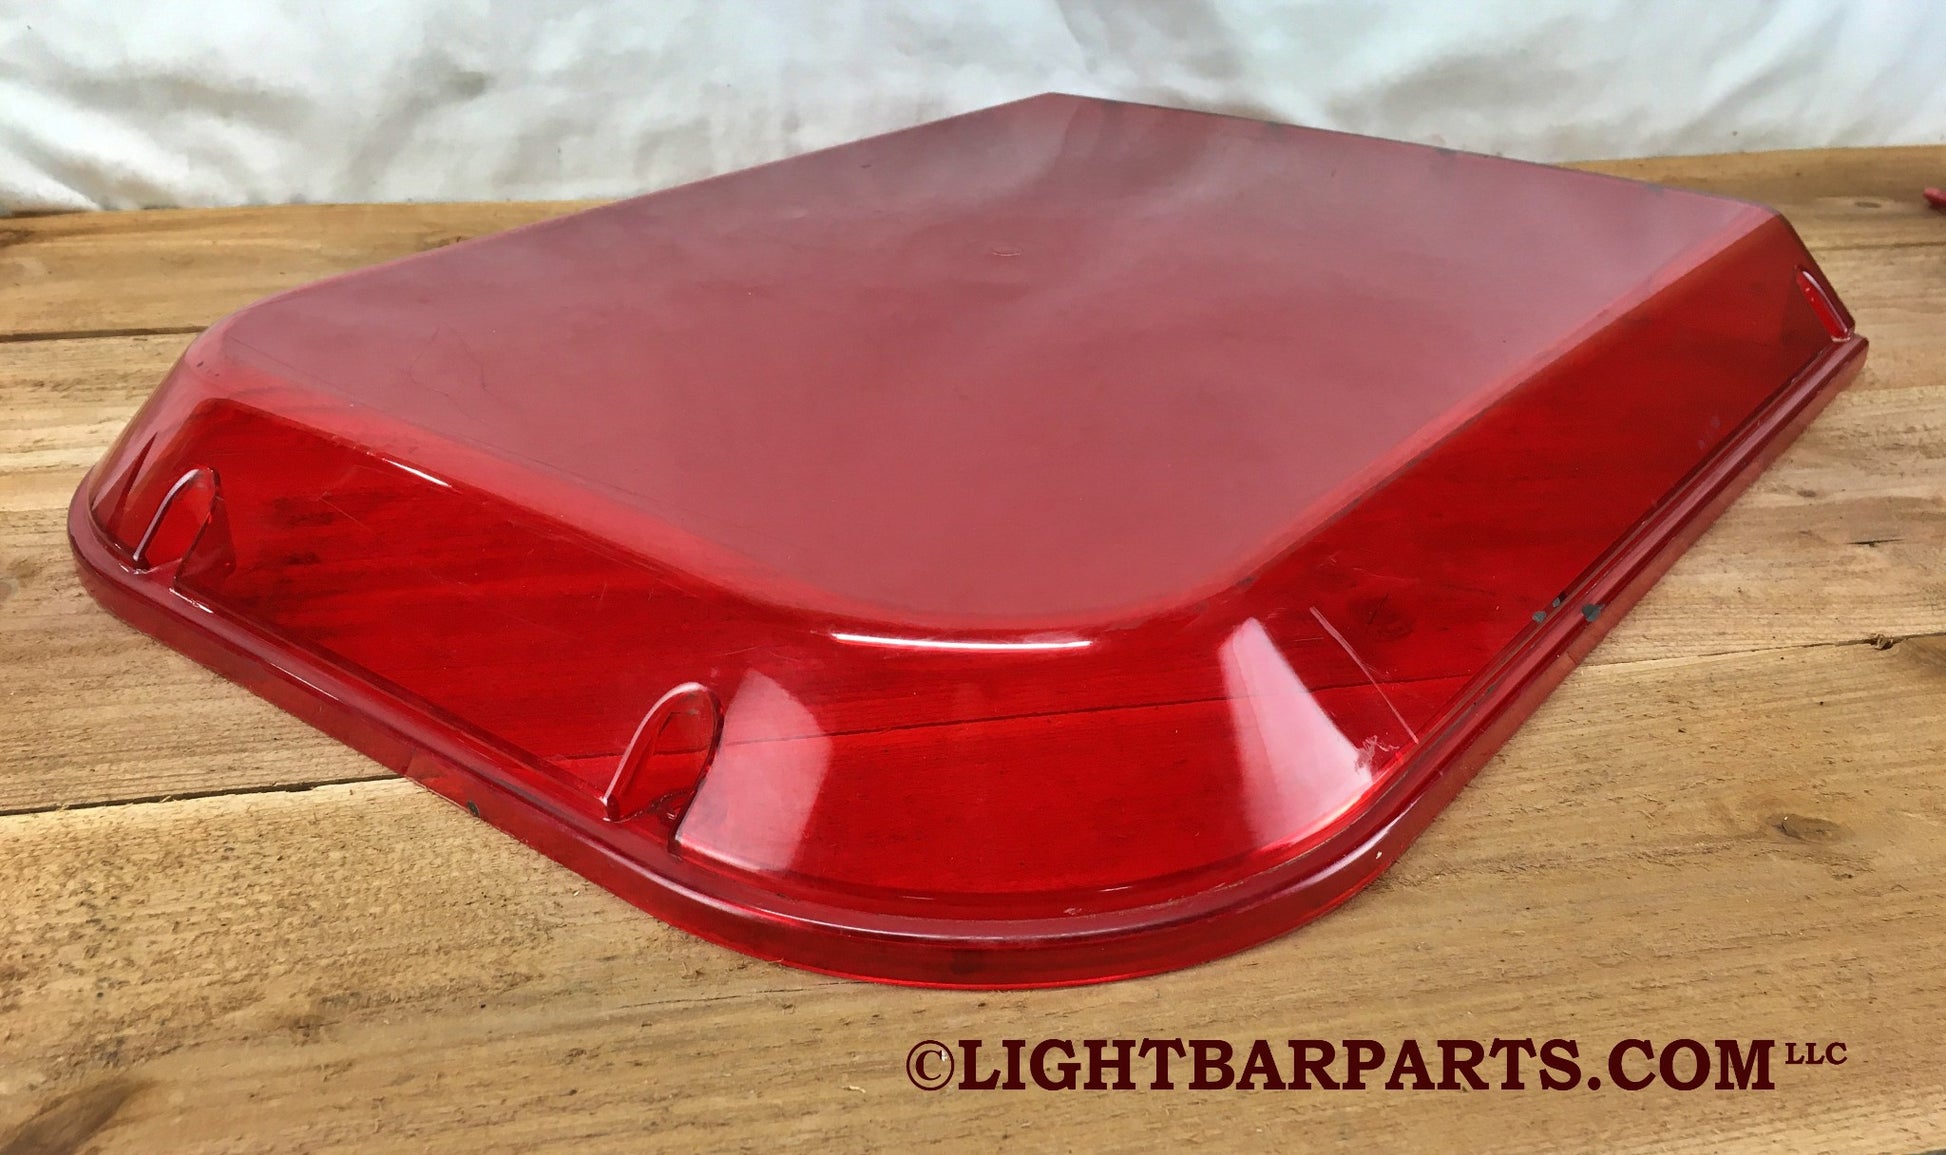 Star Headlight Lantern - Vintage Sabre Lightbar - Red End Dome with Screws - light bar parts